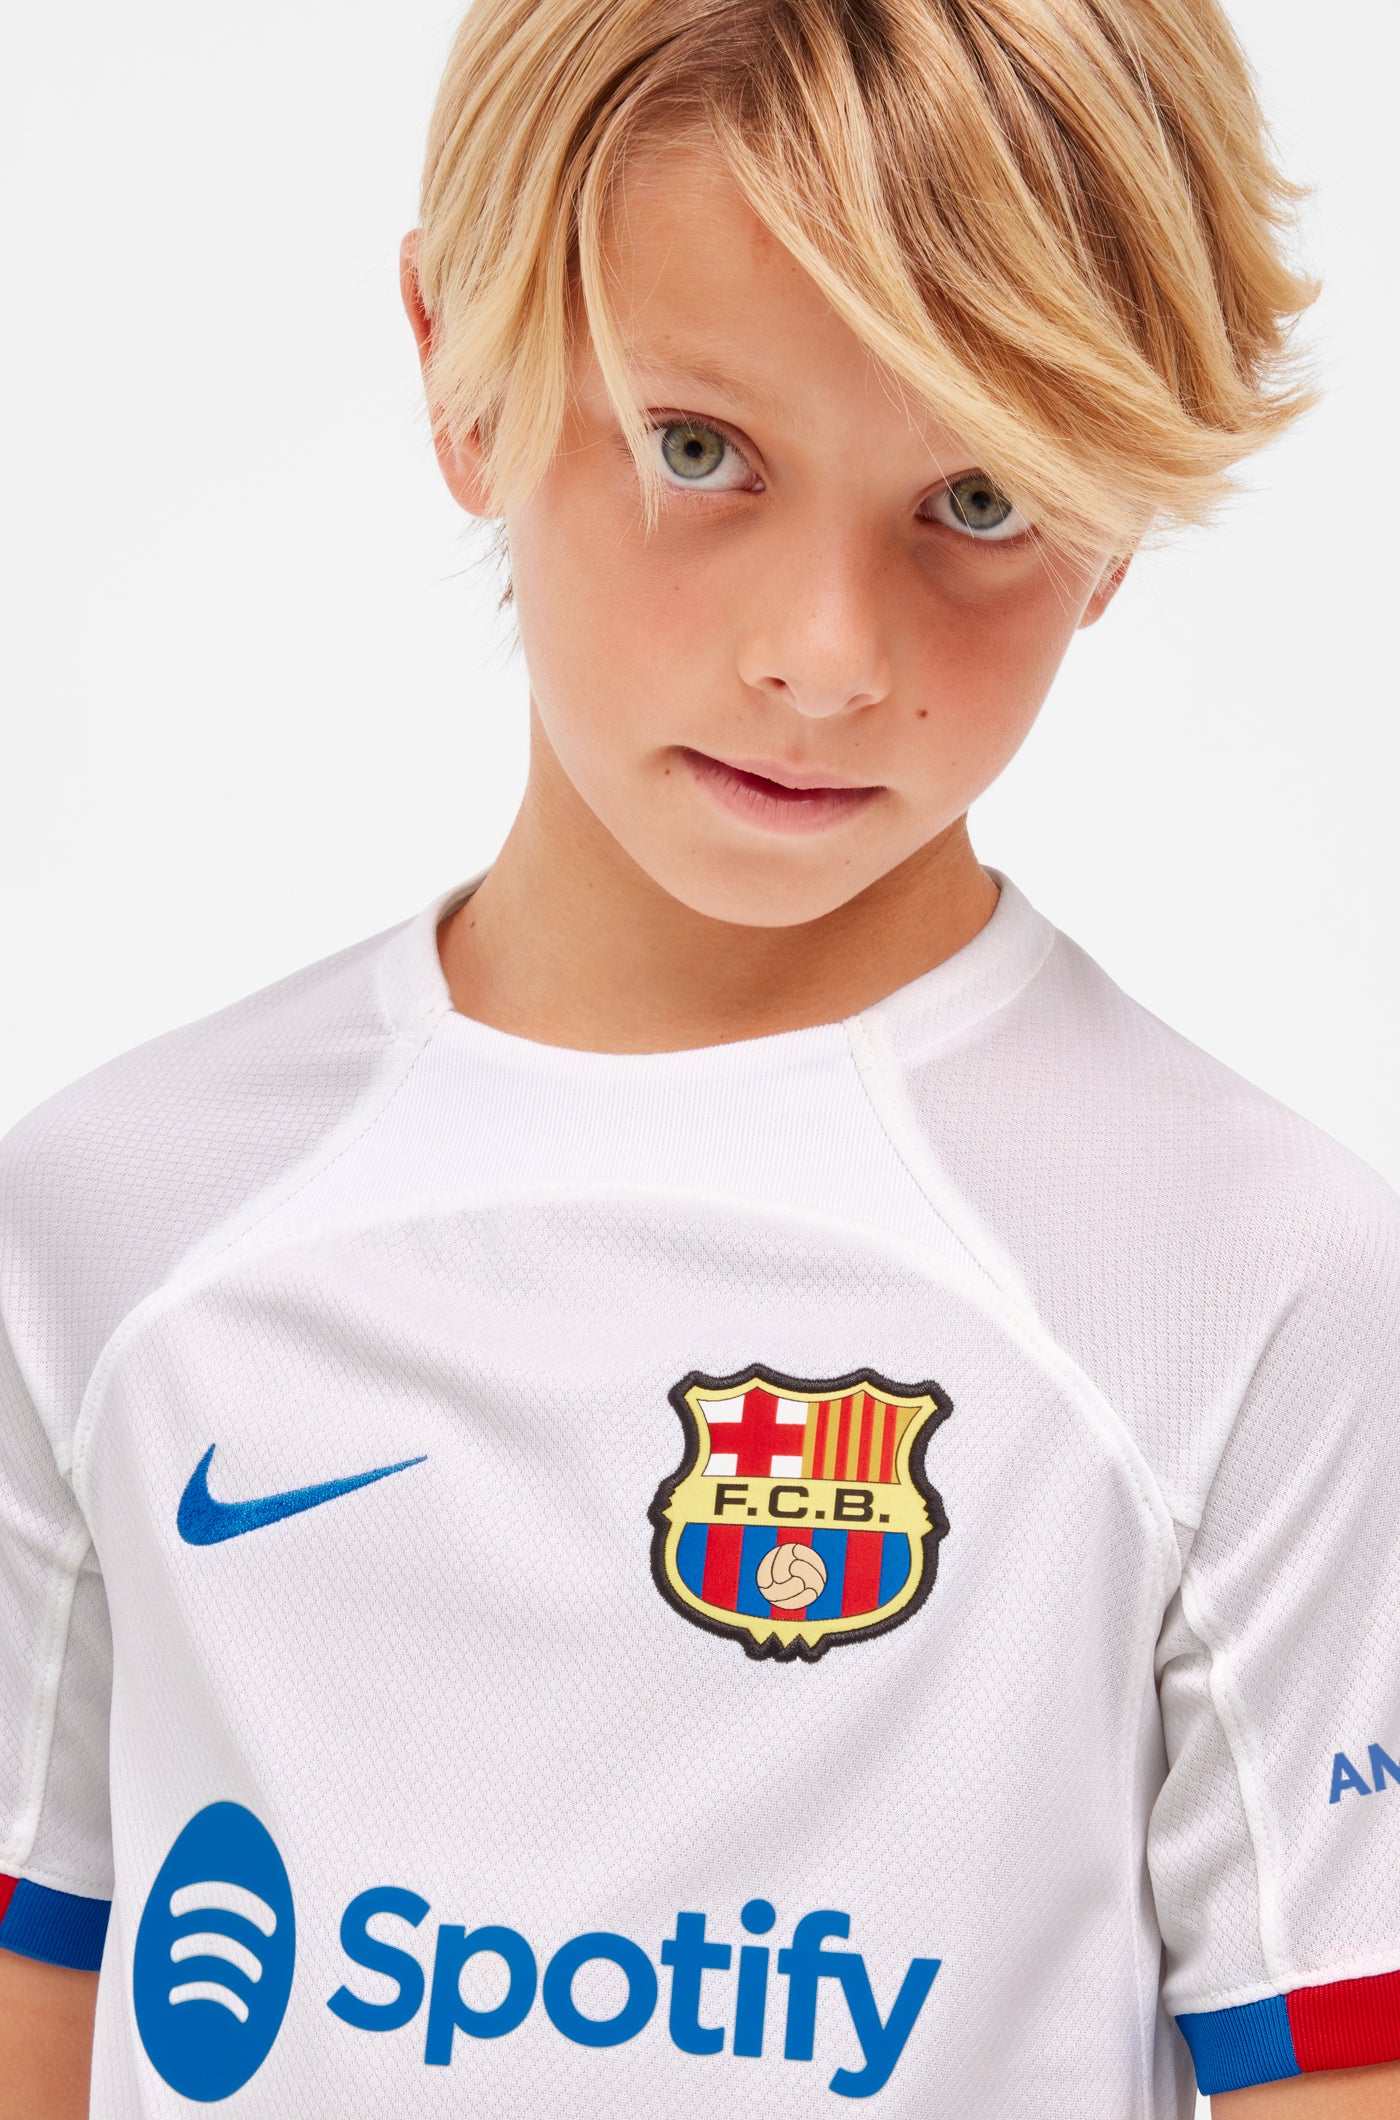 UCL FC Barcelona away shirt 23/24 - Junior